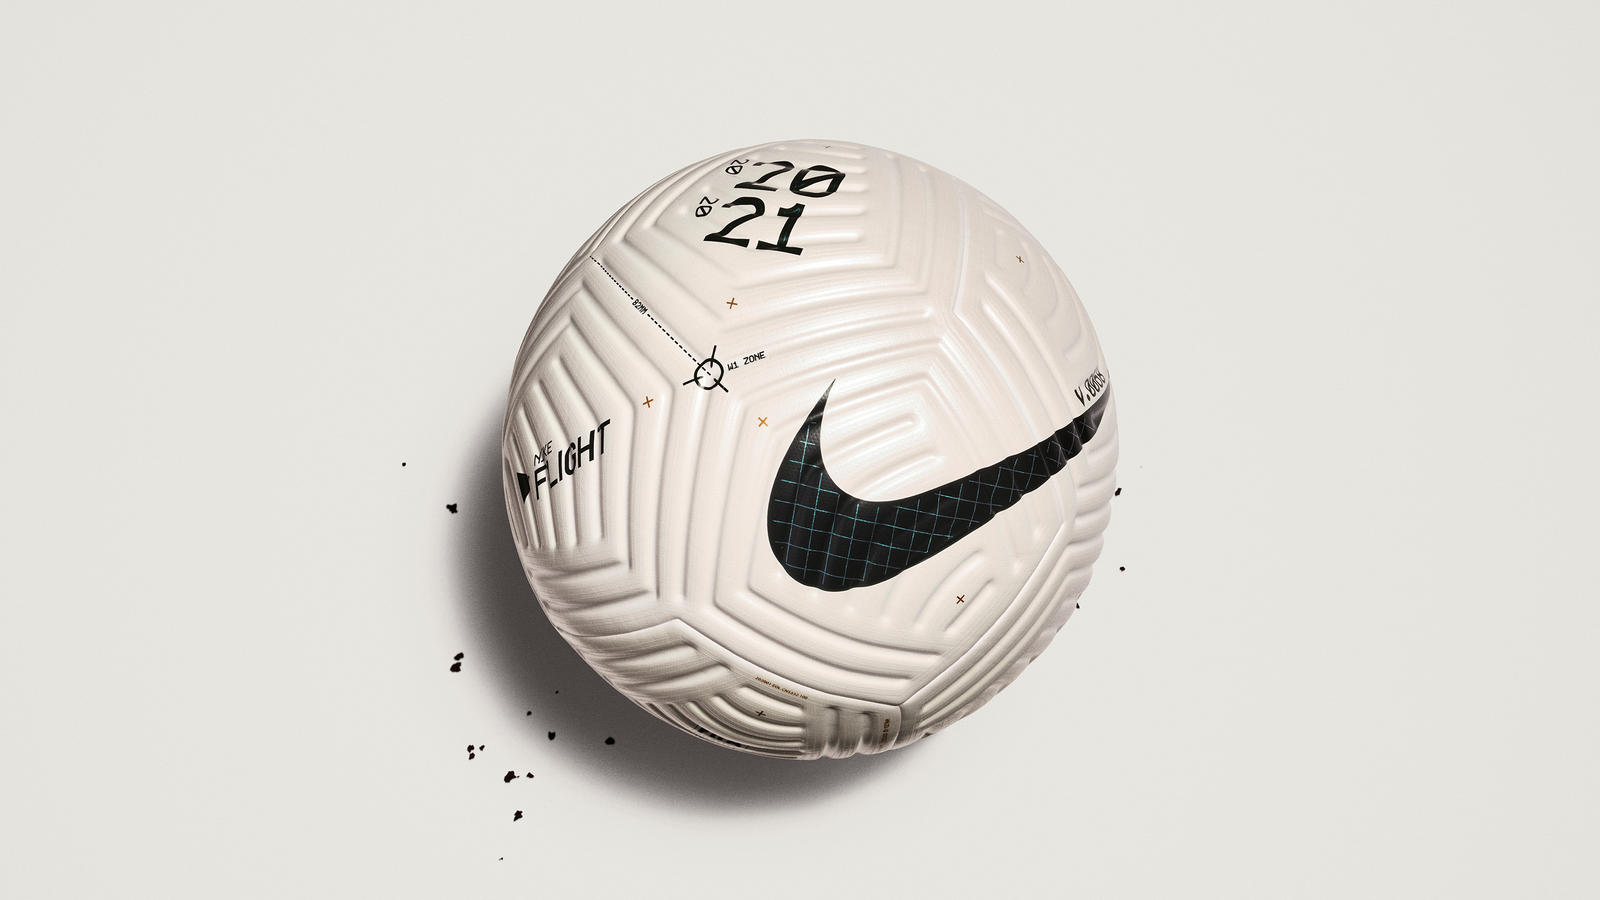 Th antiguo Fabricante Nike Flight Ball, la pelota de fútbol más precisa - Digital Trends Español